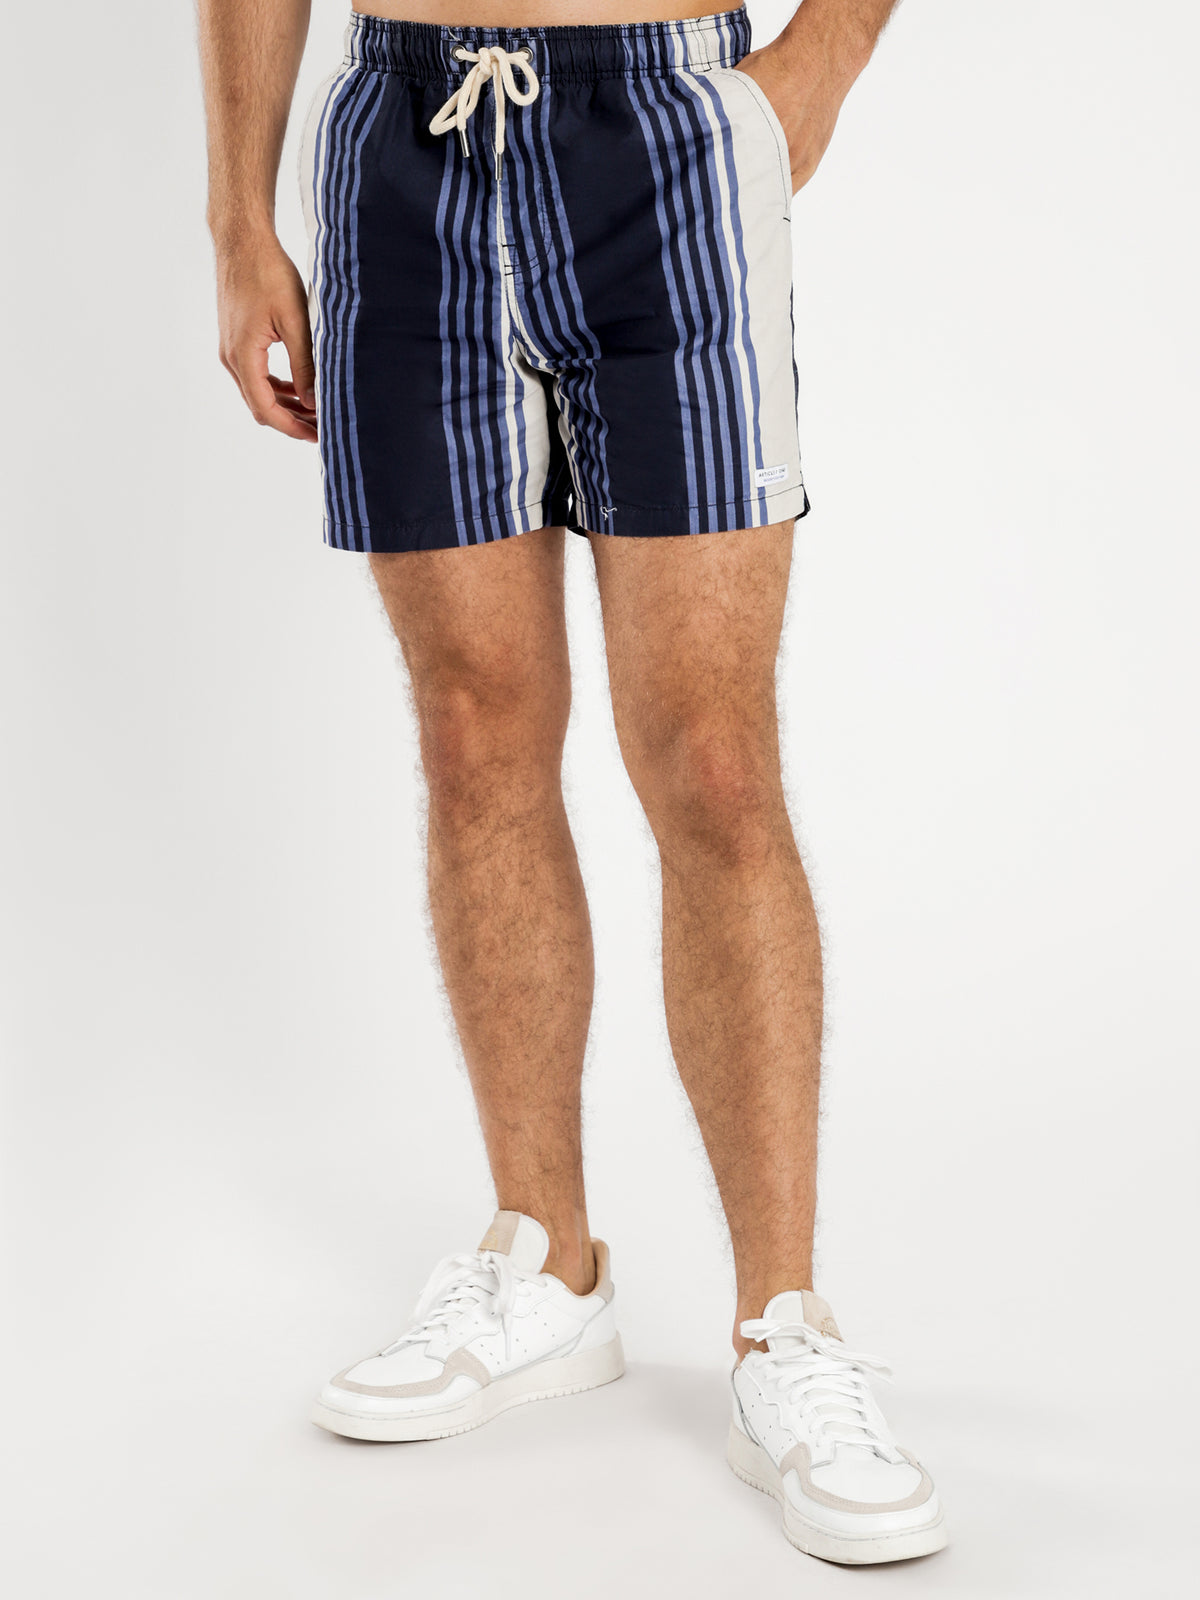 Harvey Swim Shorts in Navy Stripe